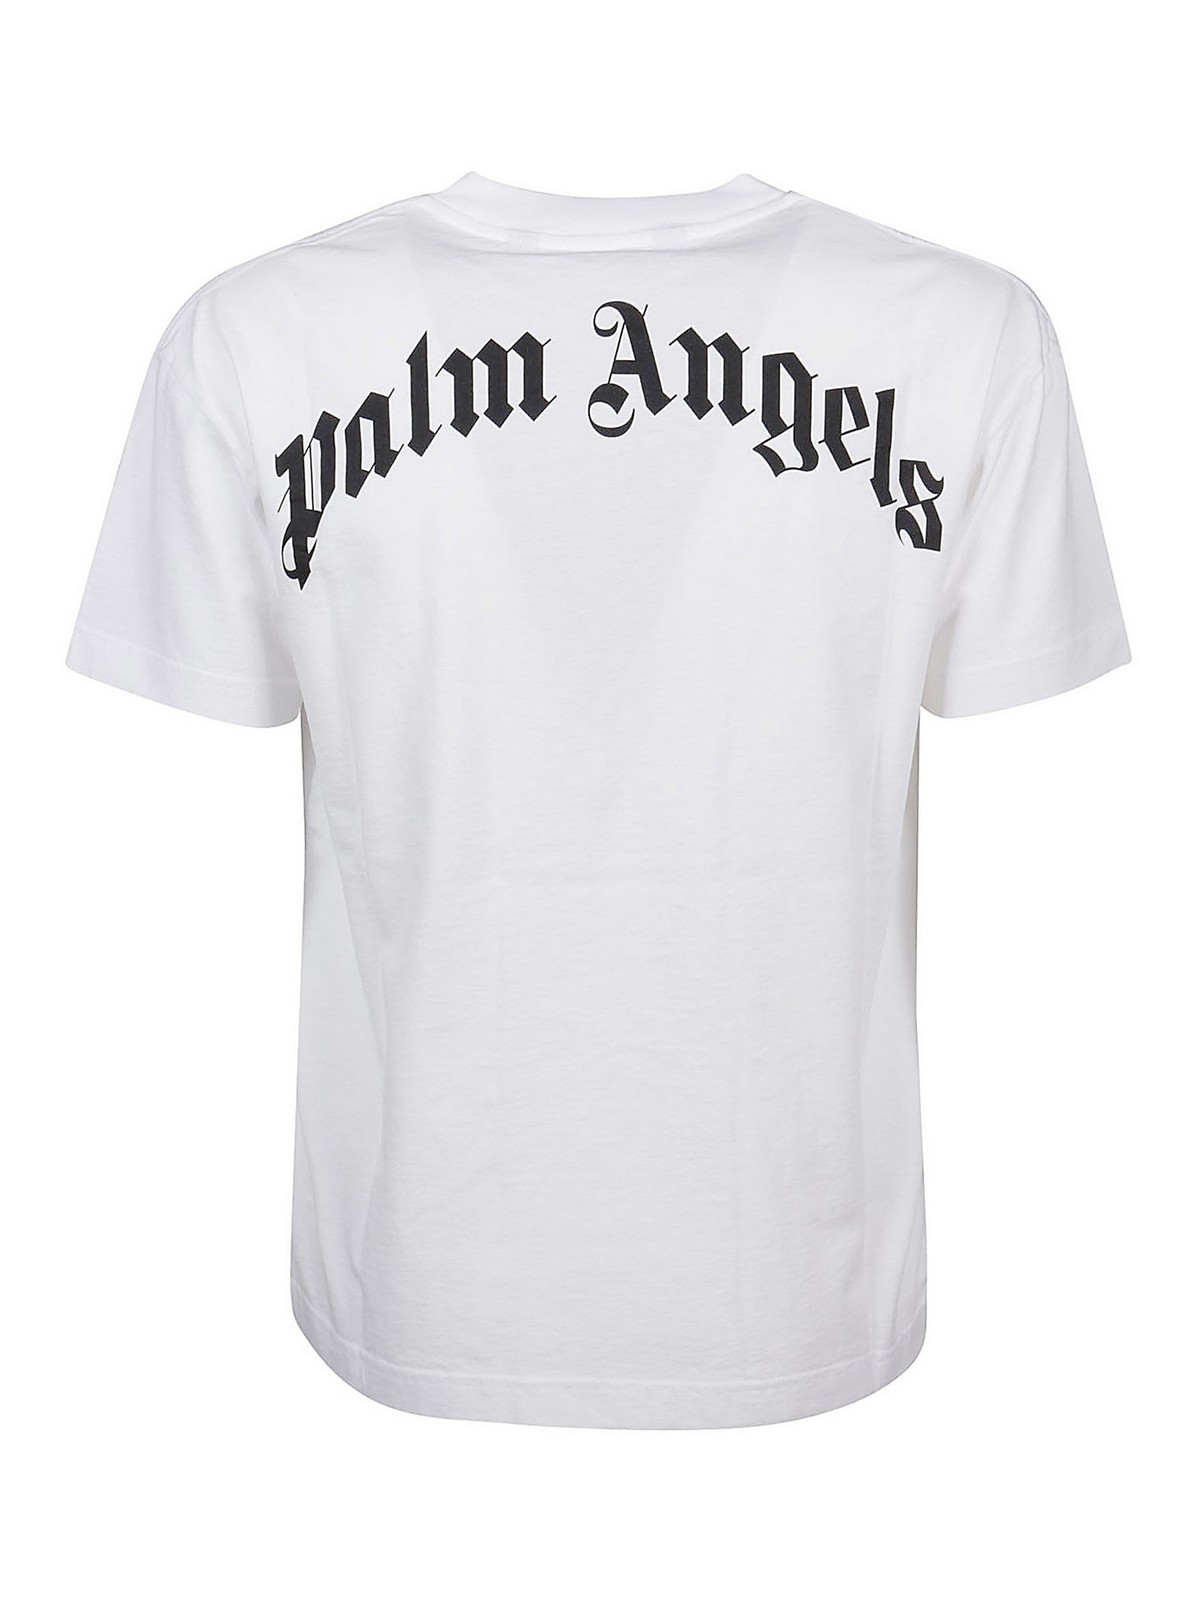 palms angels shirts